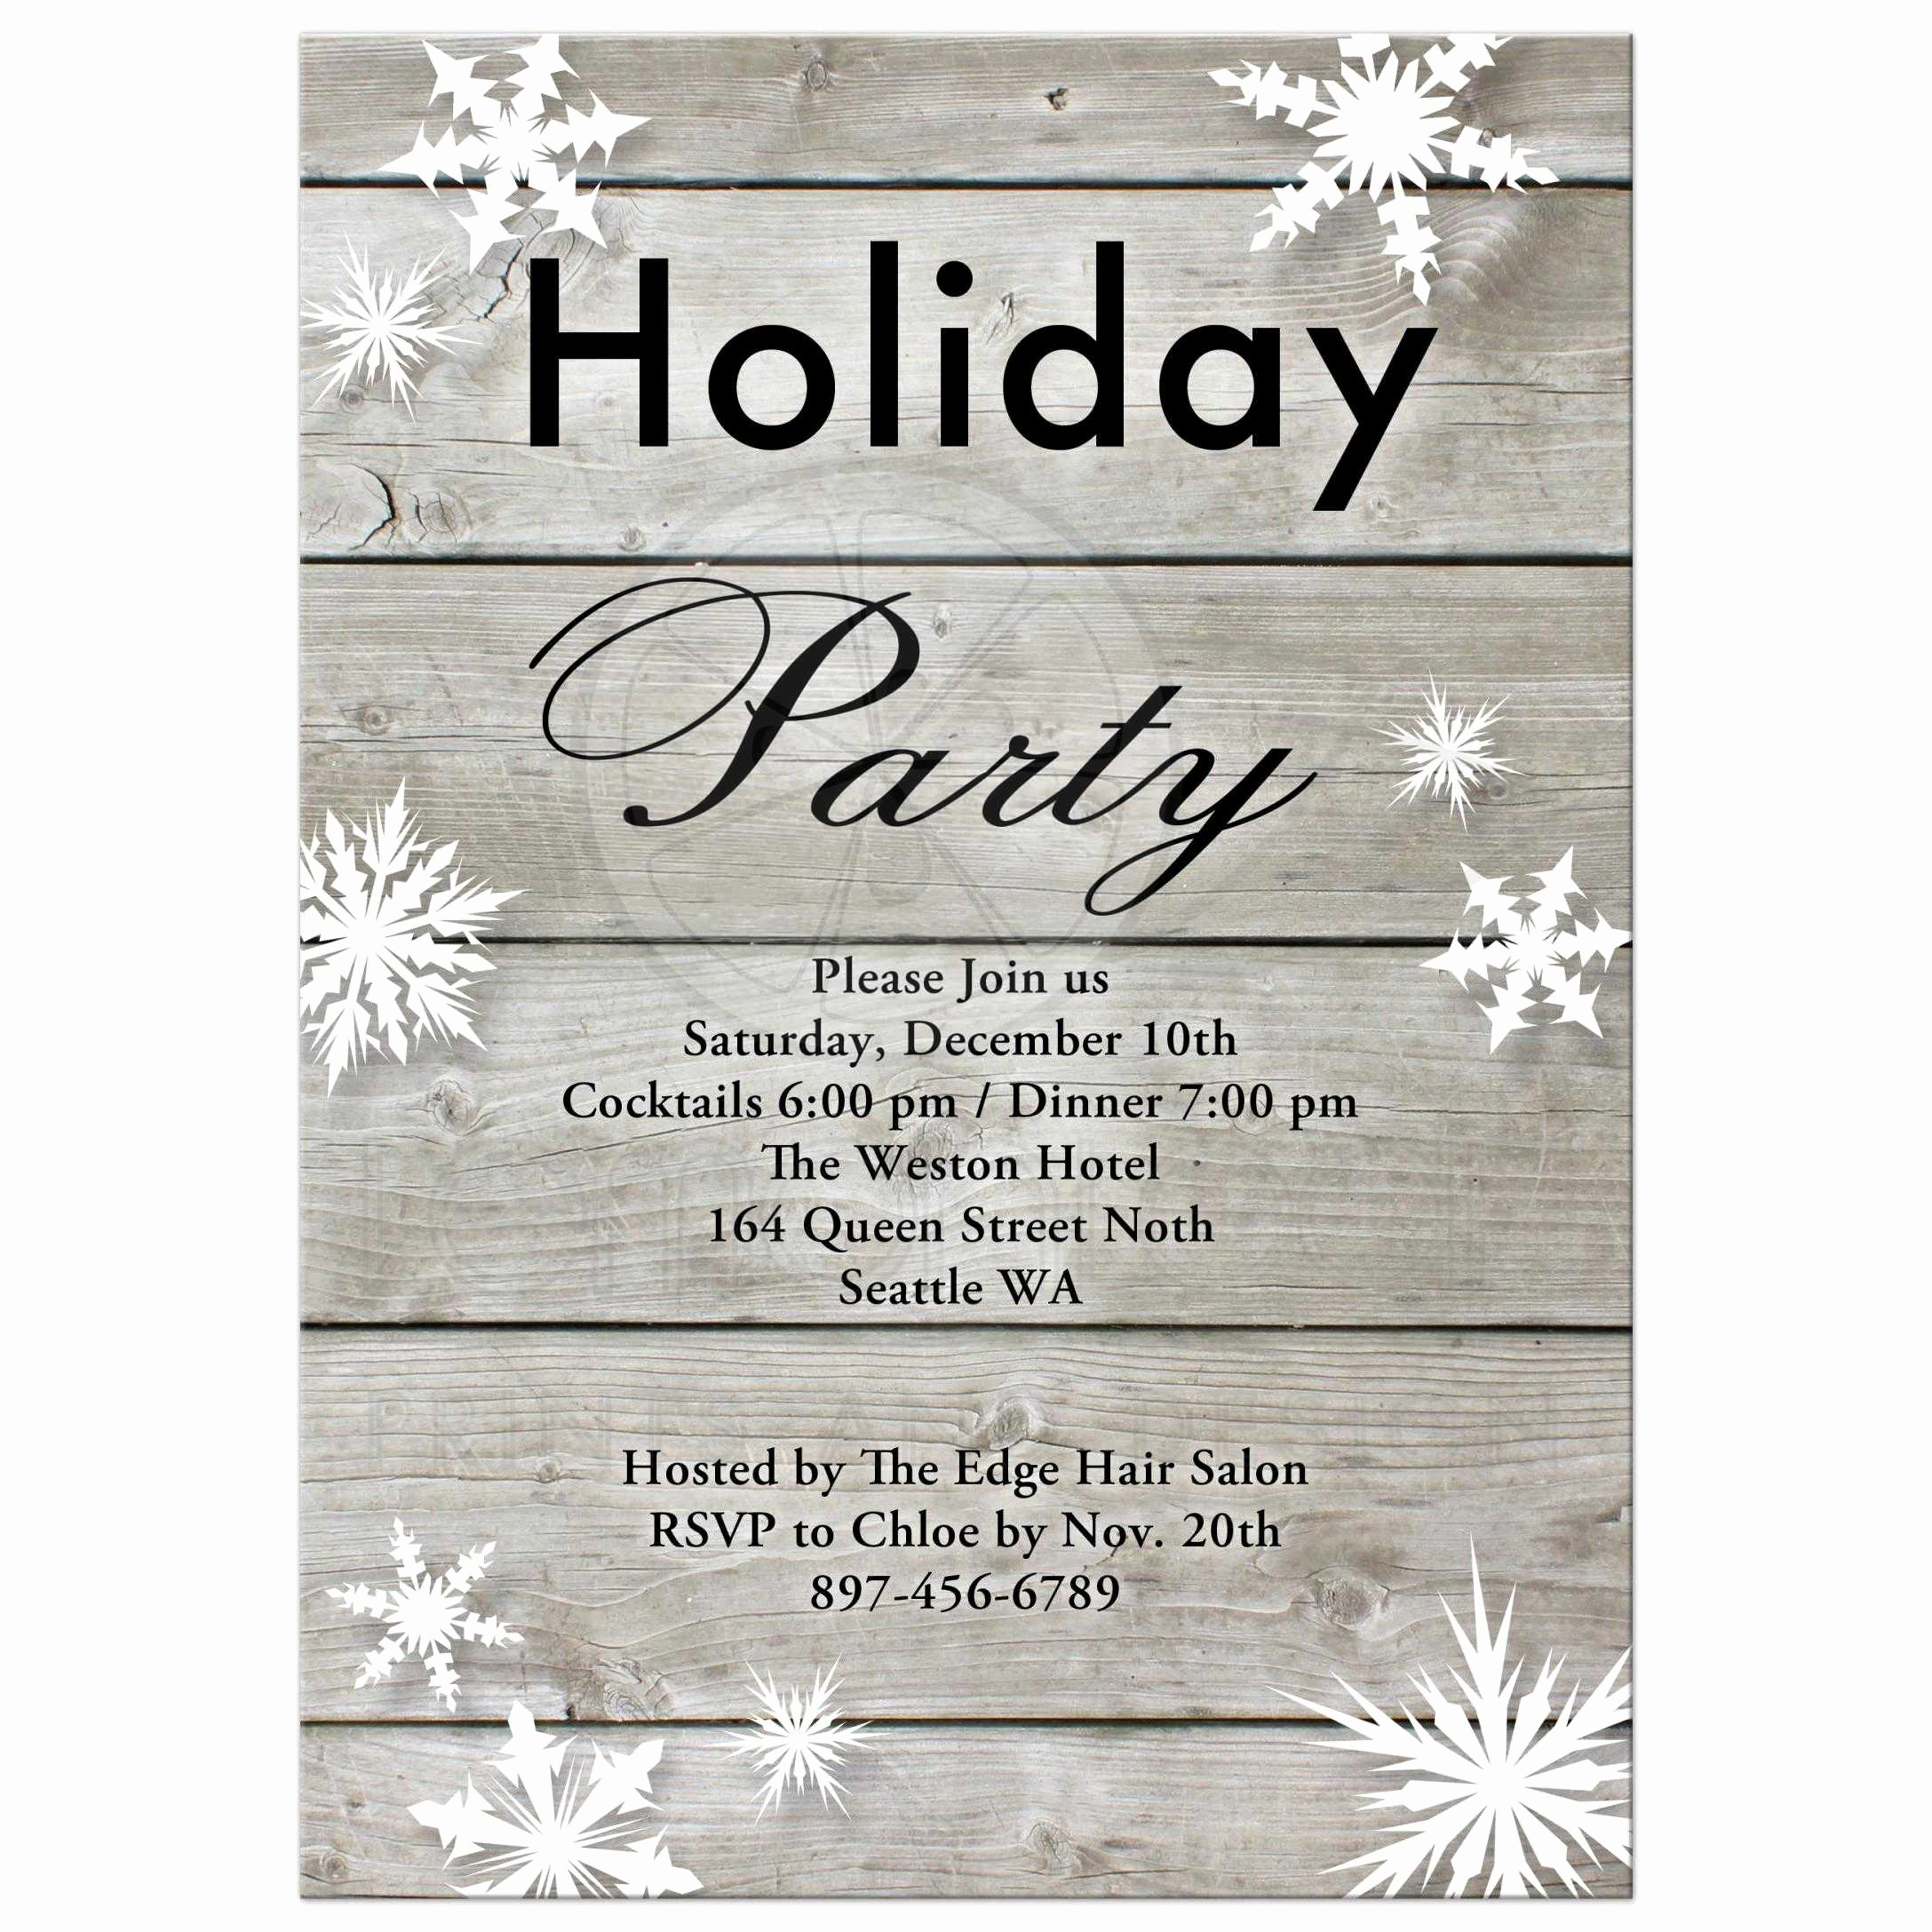 Company Holiday Party Invitation Unique Corporate Holiday Party Invitation On Barn Board